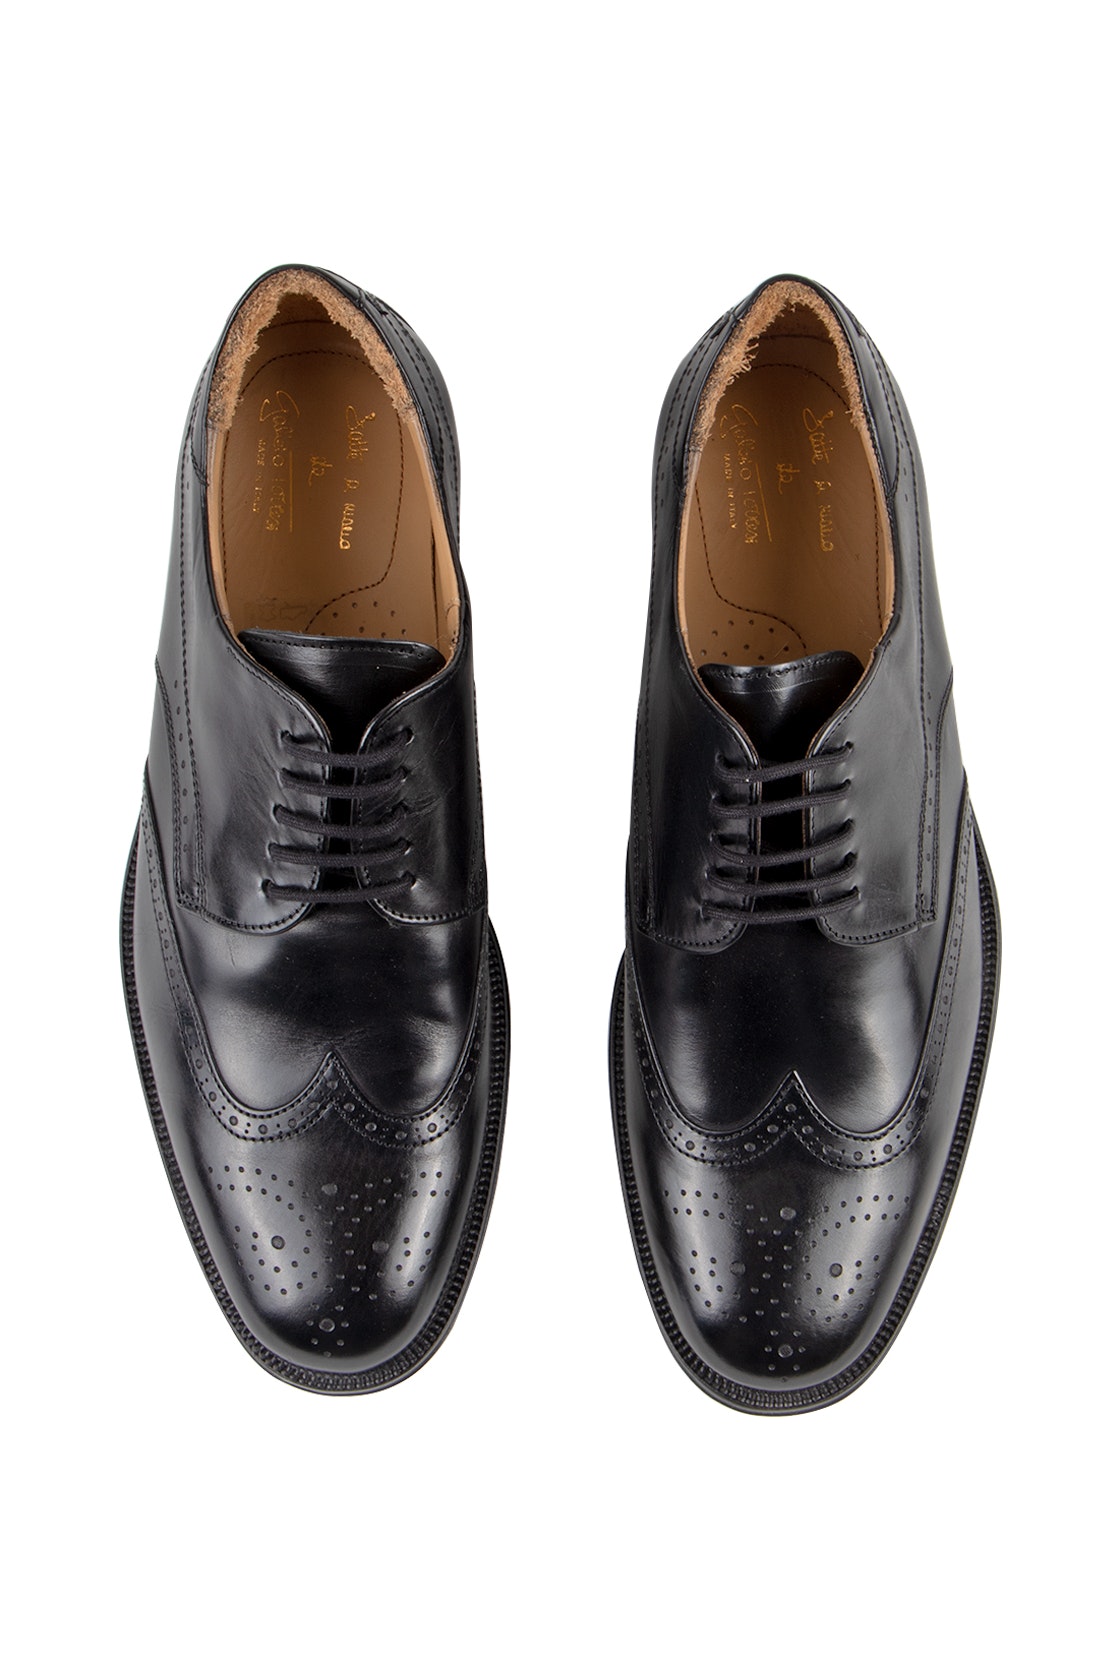 Galizio Torresi Leather Brogue Shoe